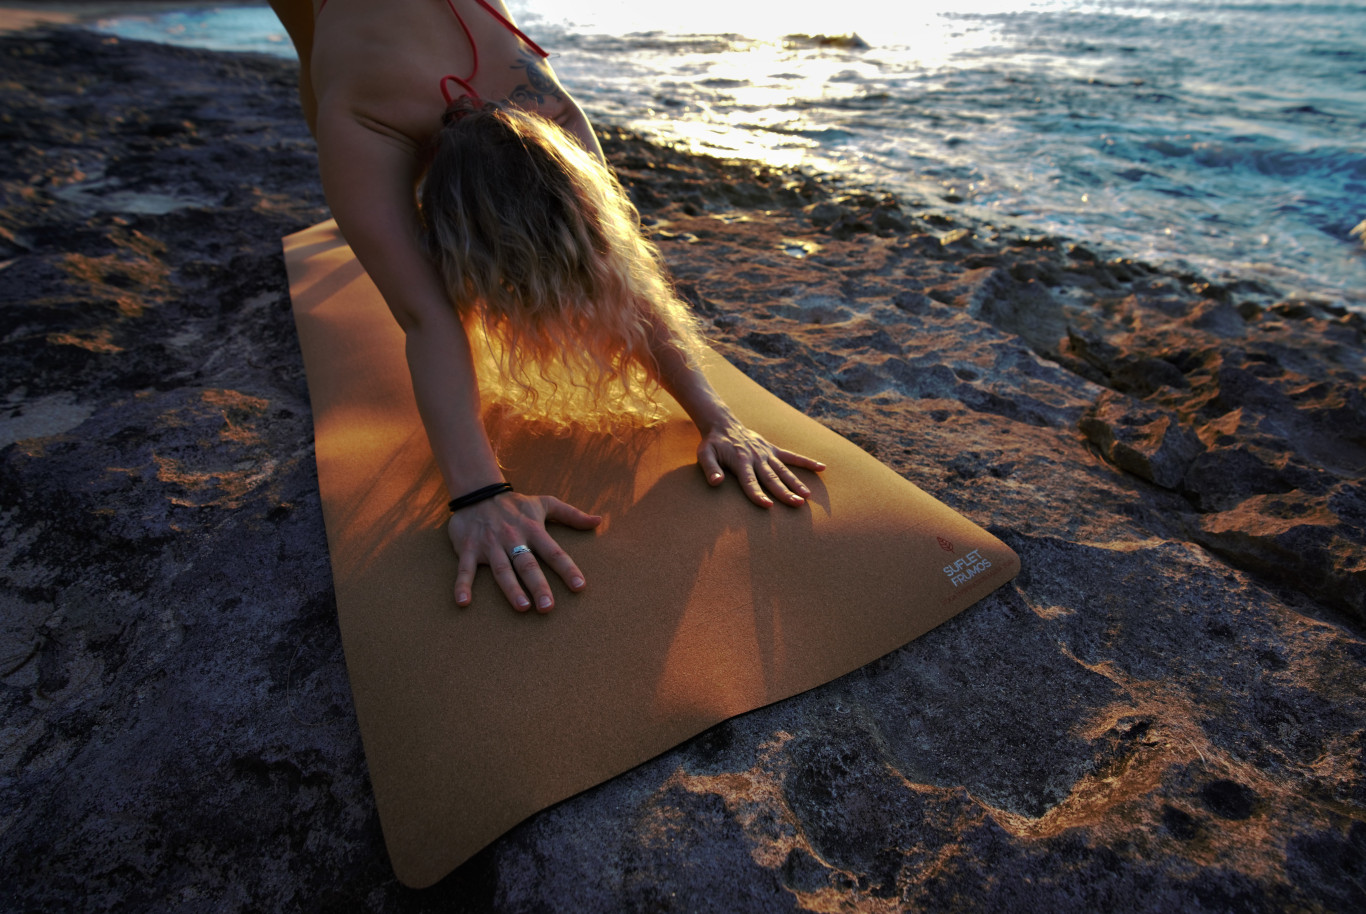 Benefits of doing yoga outdoors